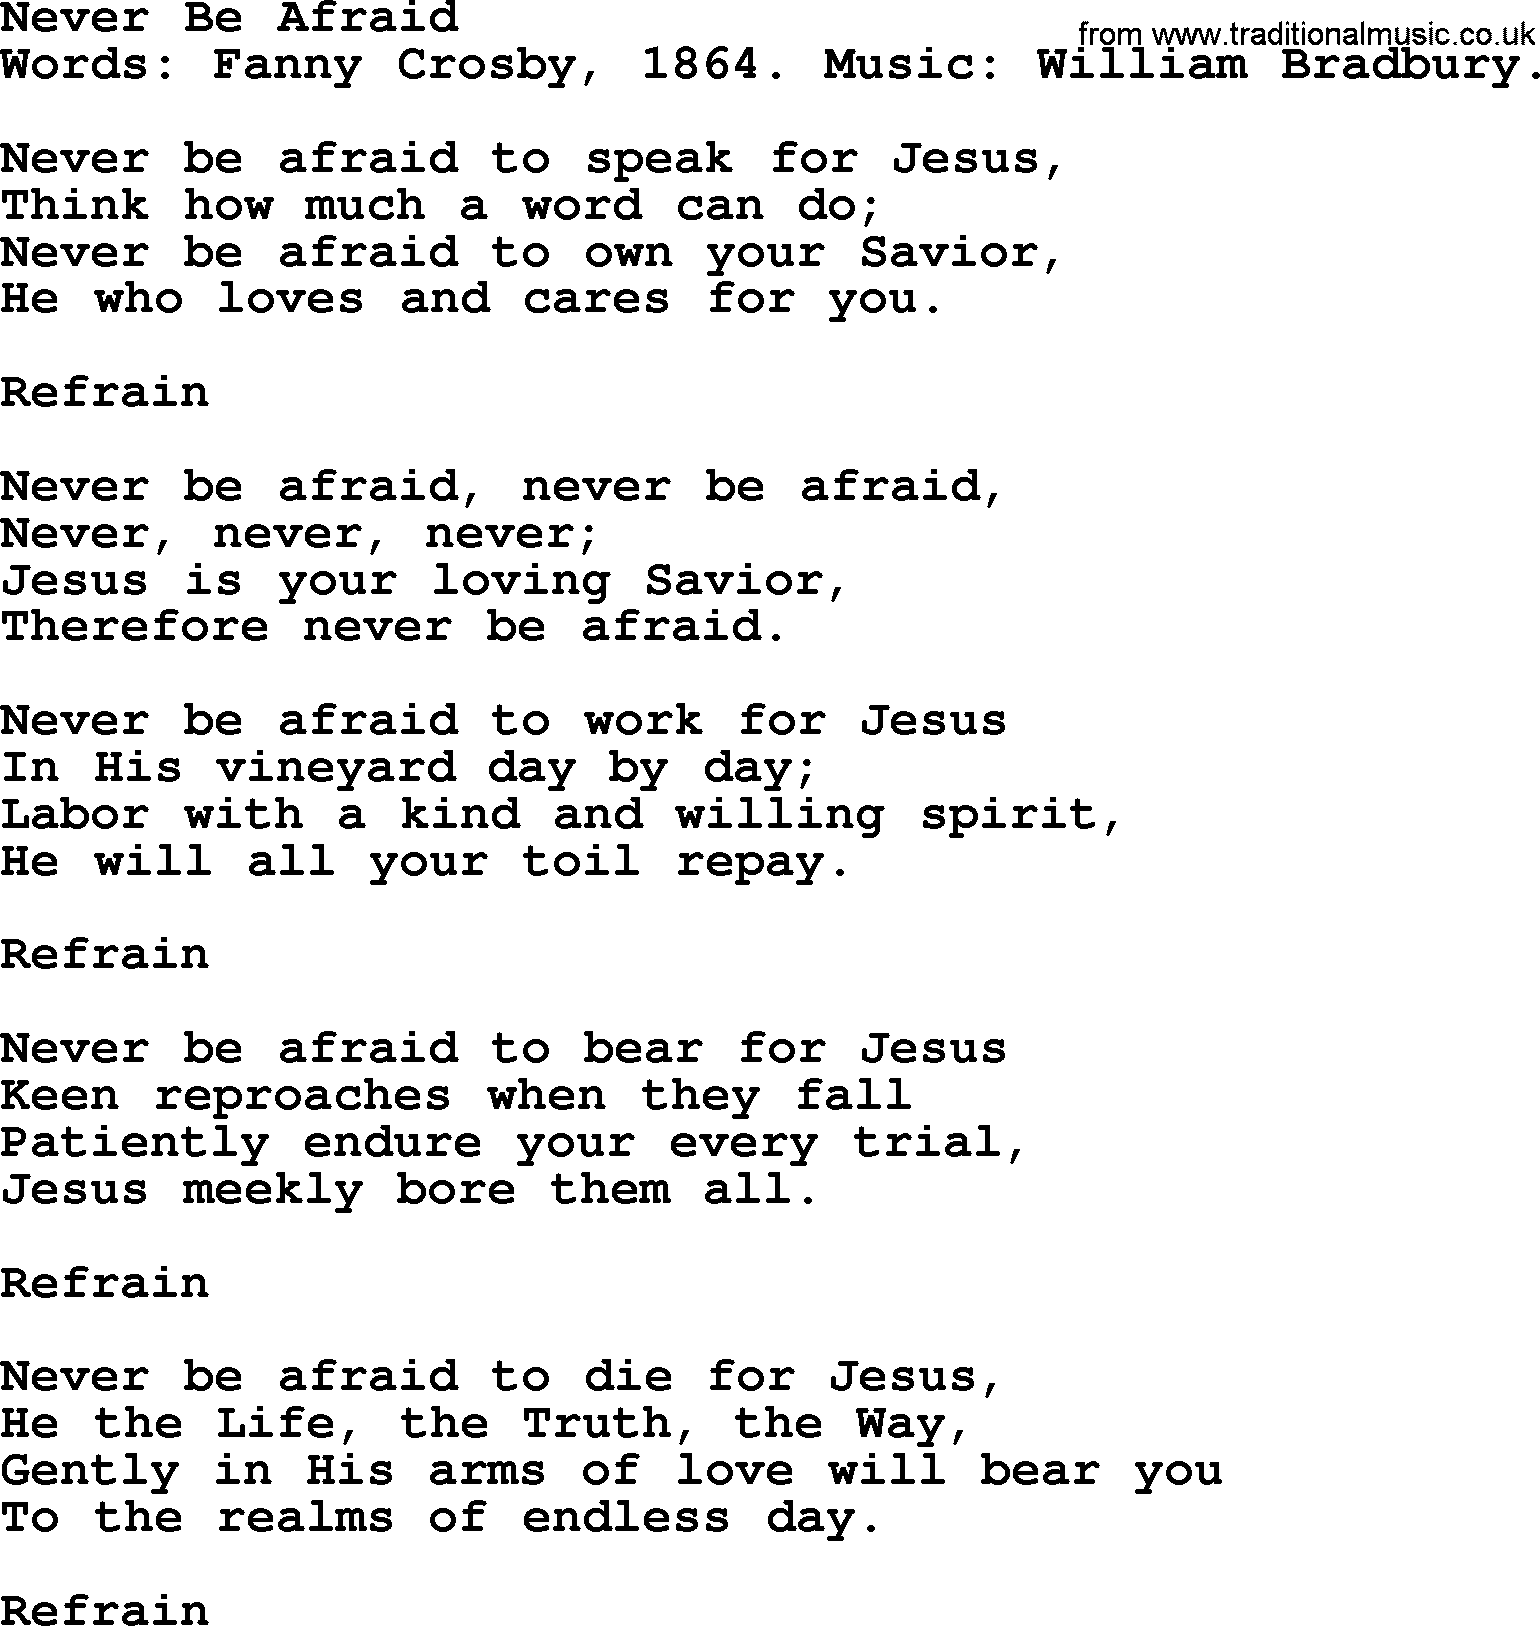 Fanny Crosby song: Never Be Afraid, lyrics